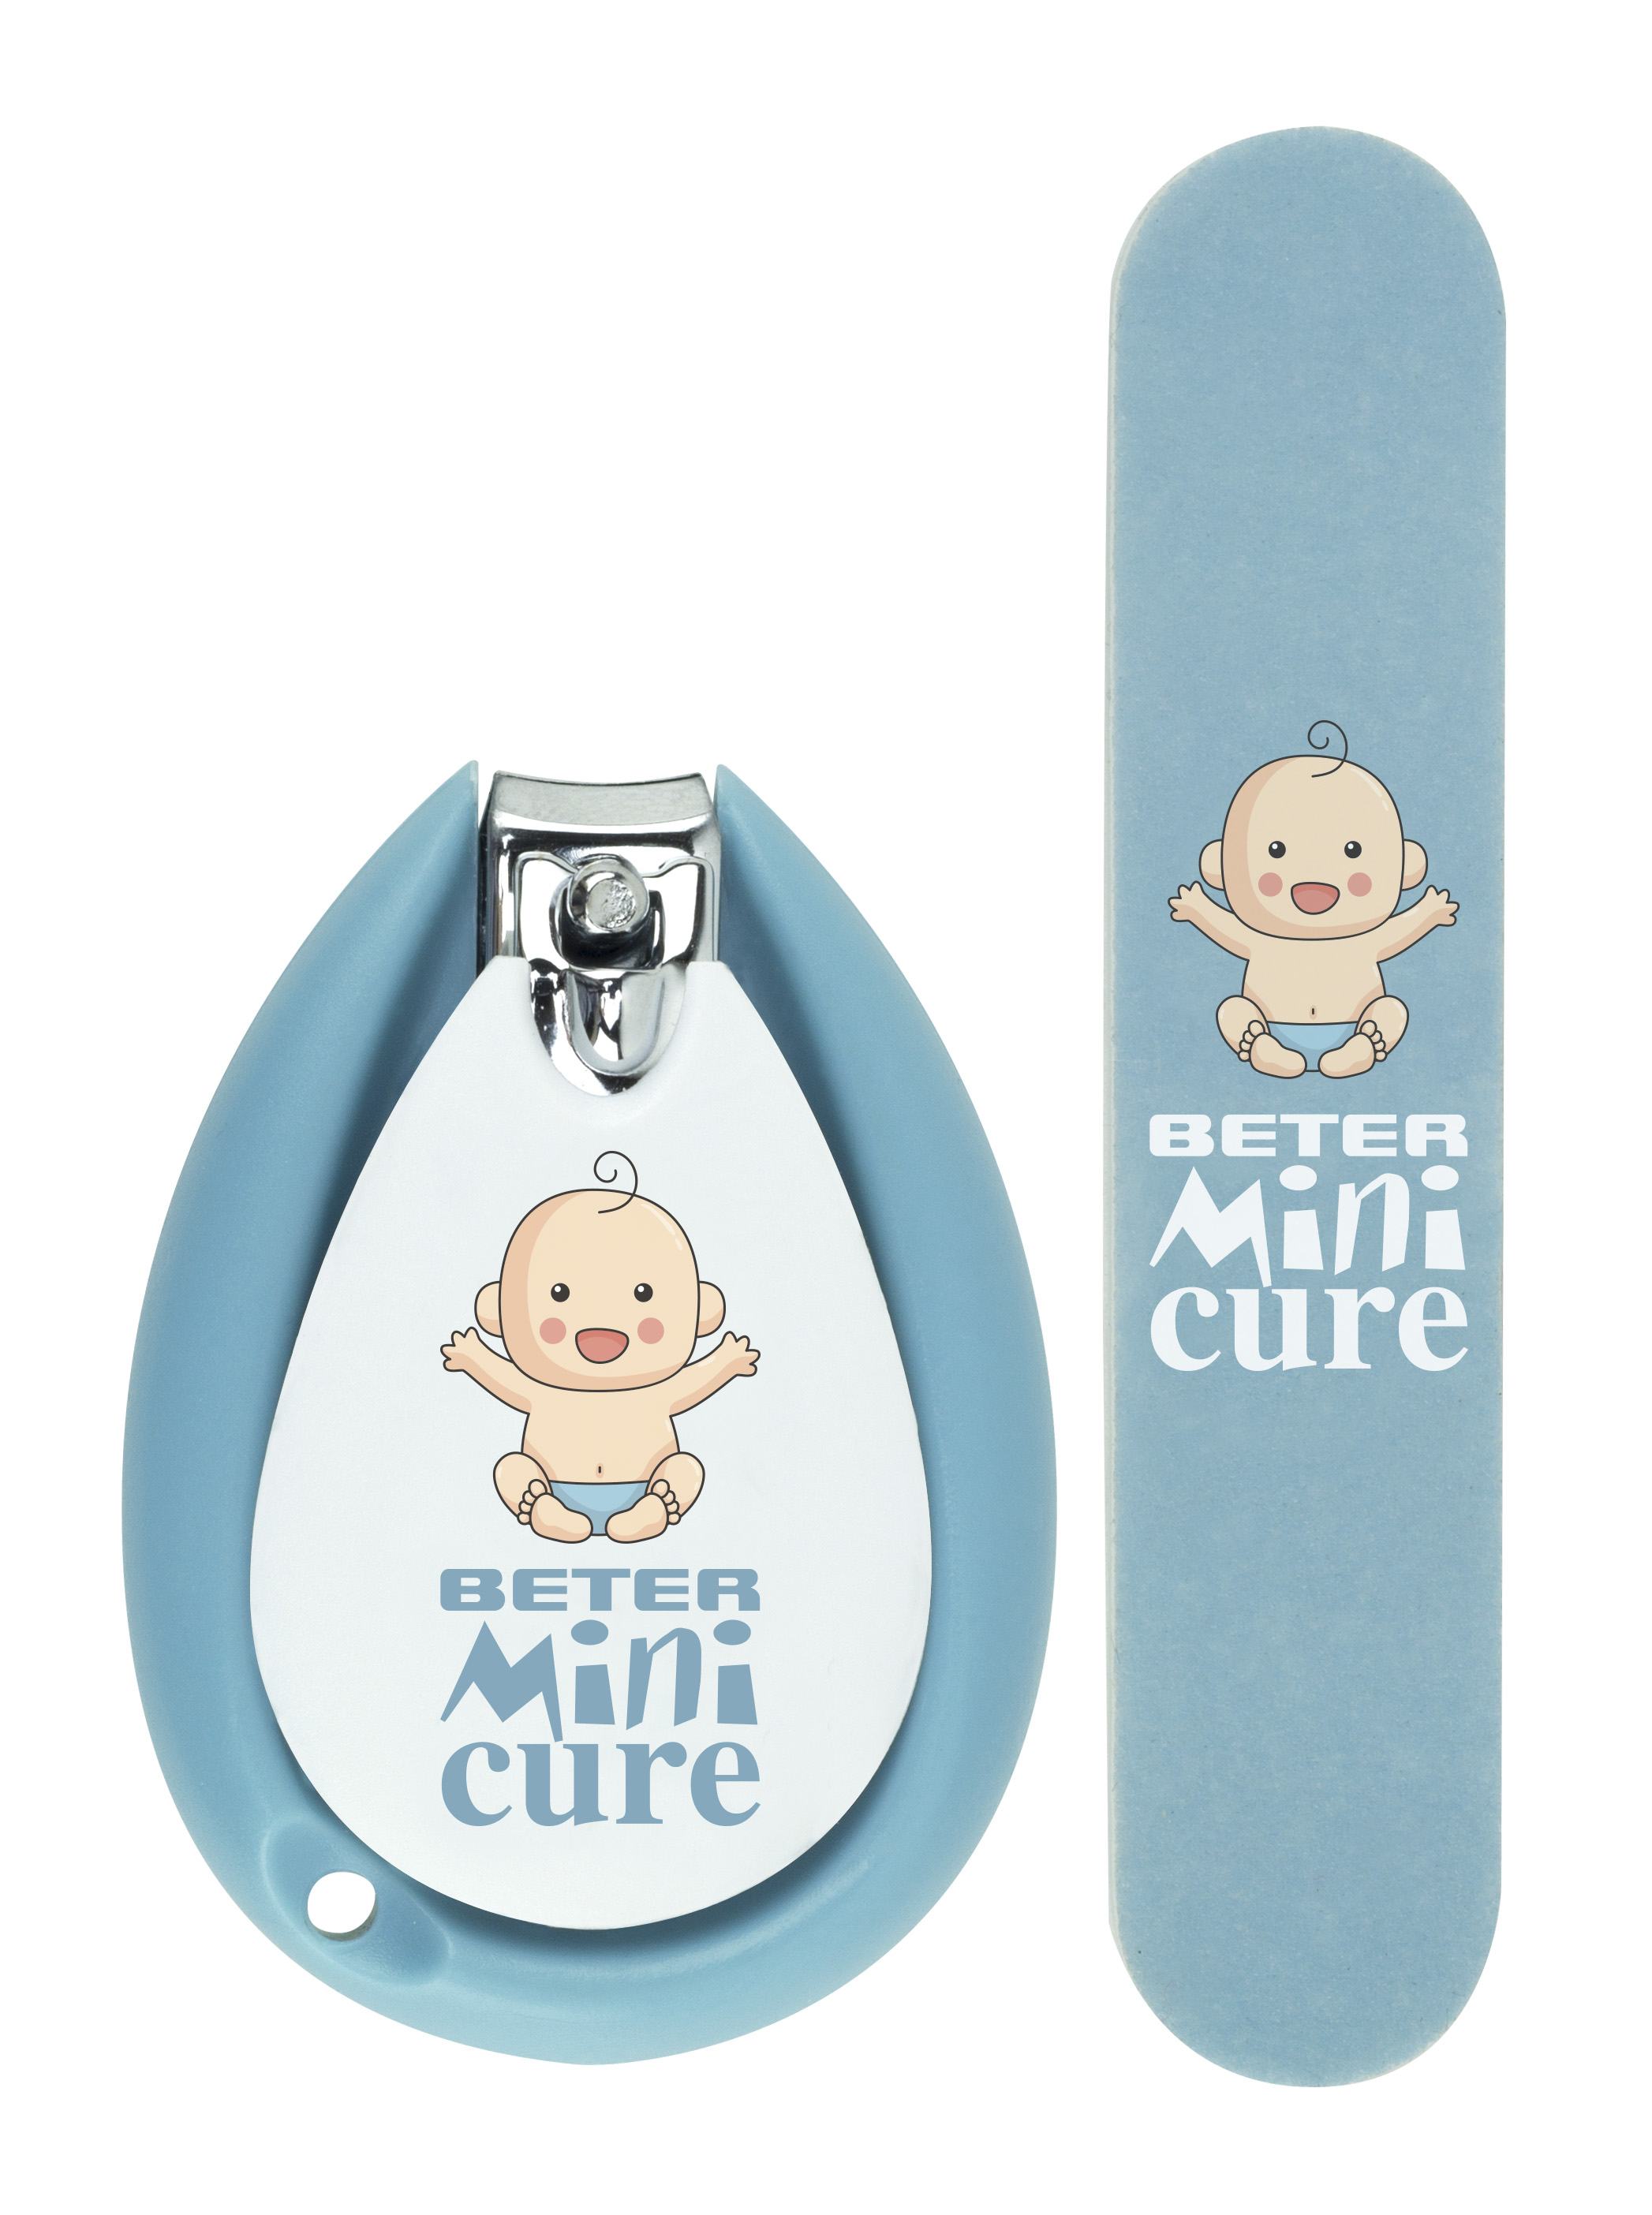 Kit Minicure para bebé - Beter